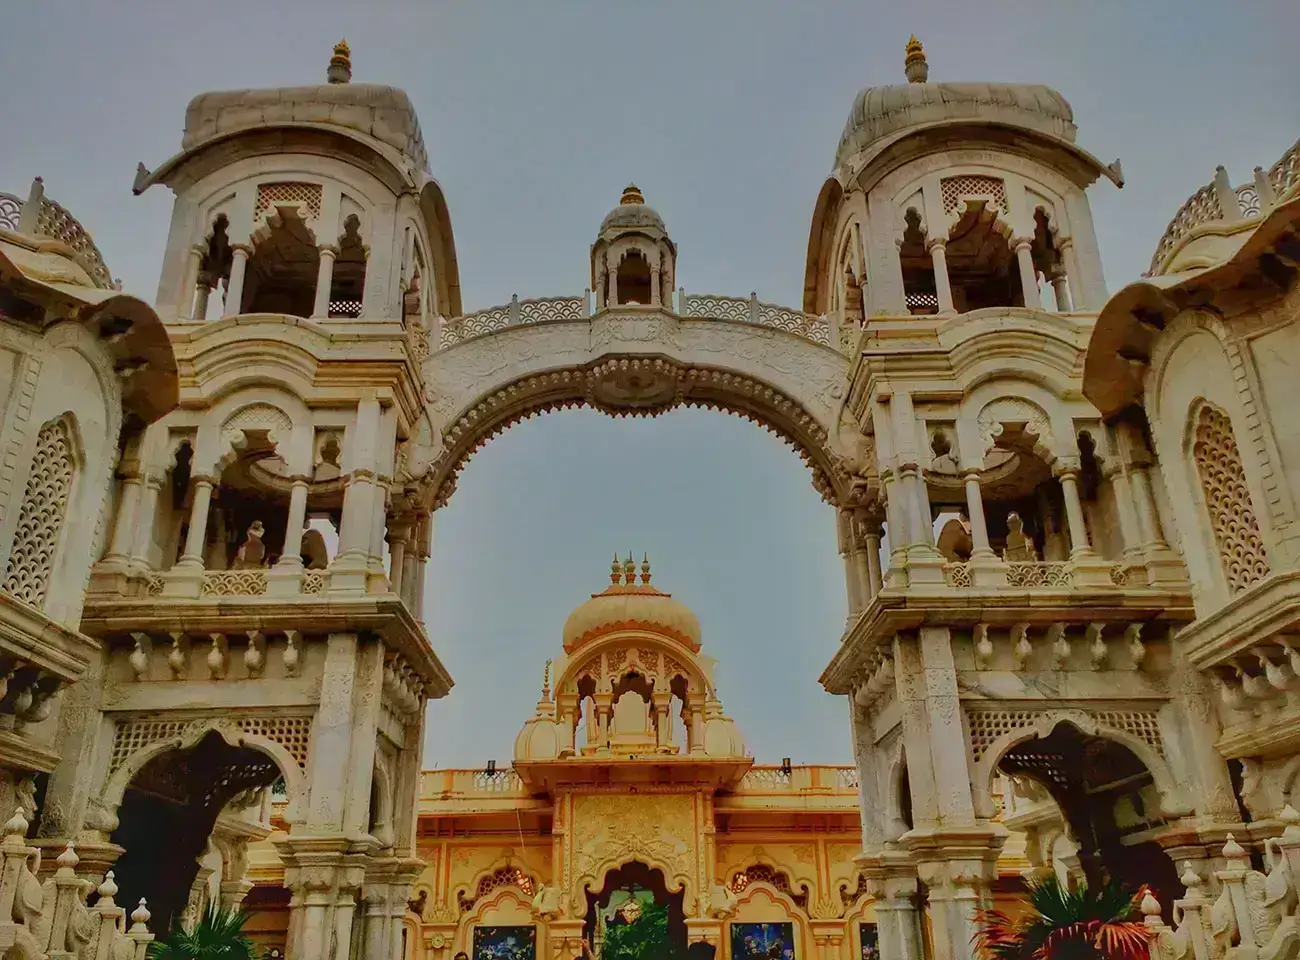 Temple in Vrindavan, Mathura (UP)